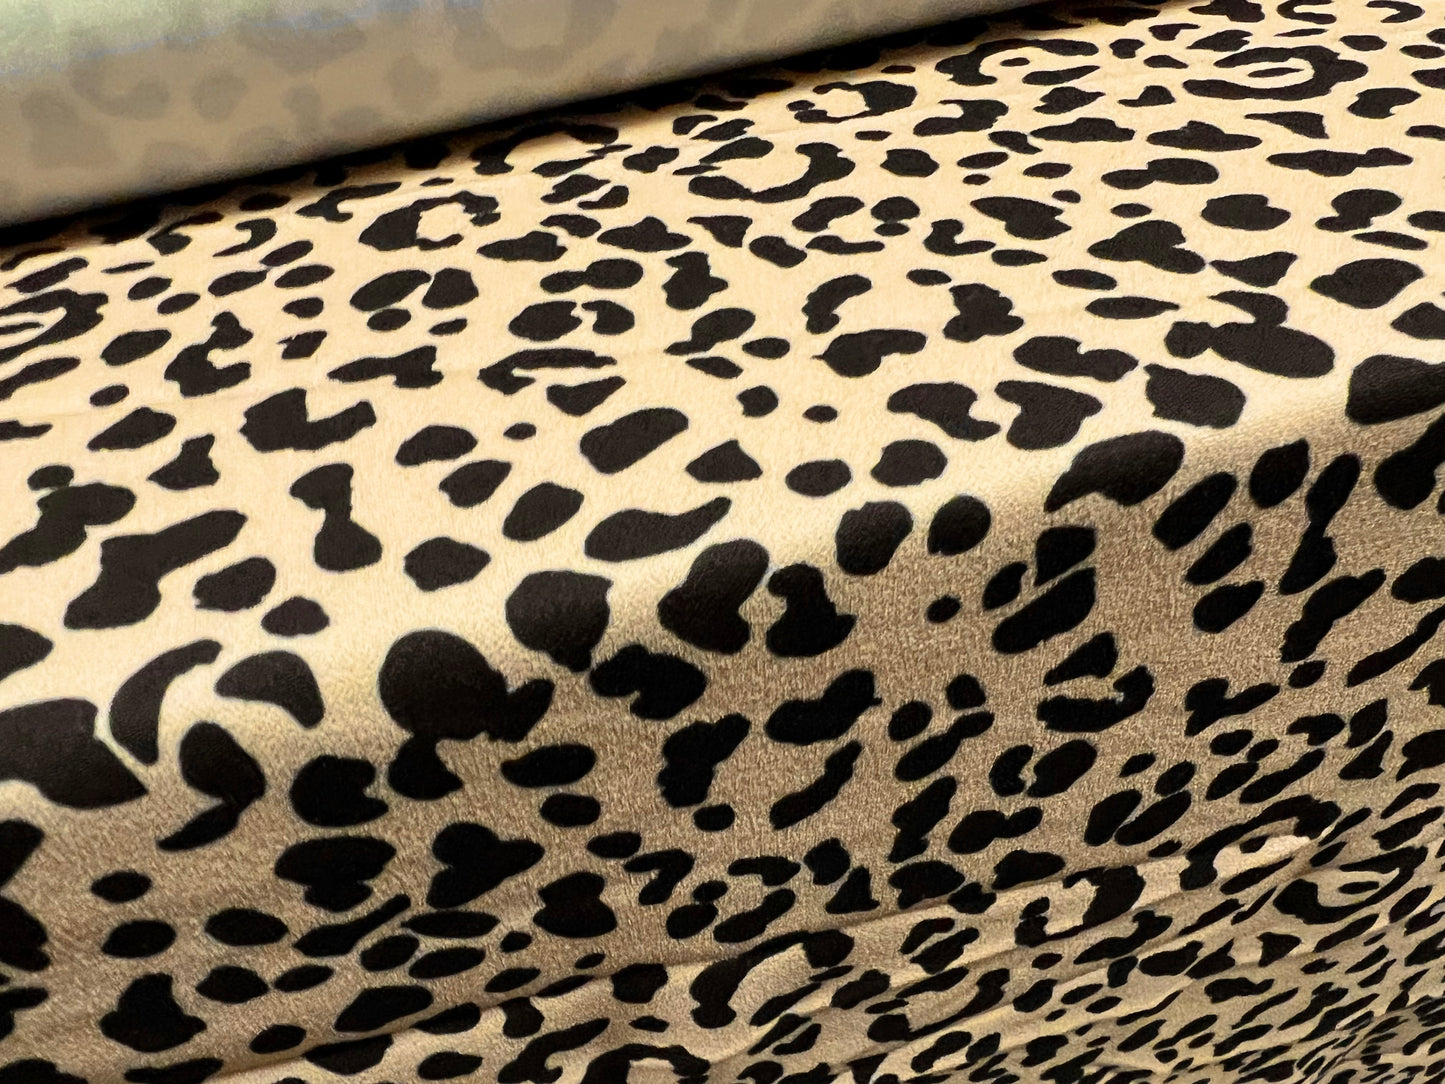 Scuba crepe stretch spandex jersey dress fabric, per metre - cheetah animal print - cream